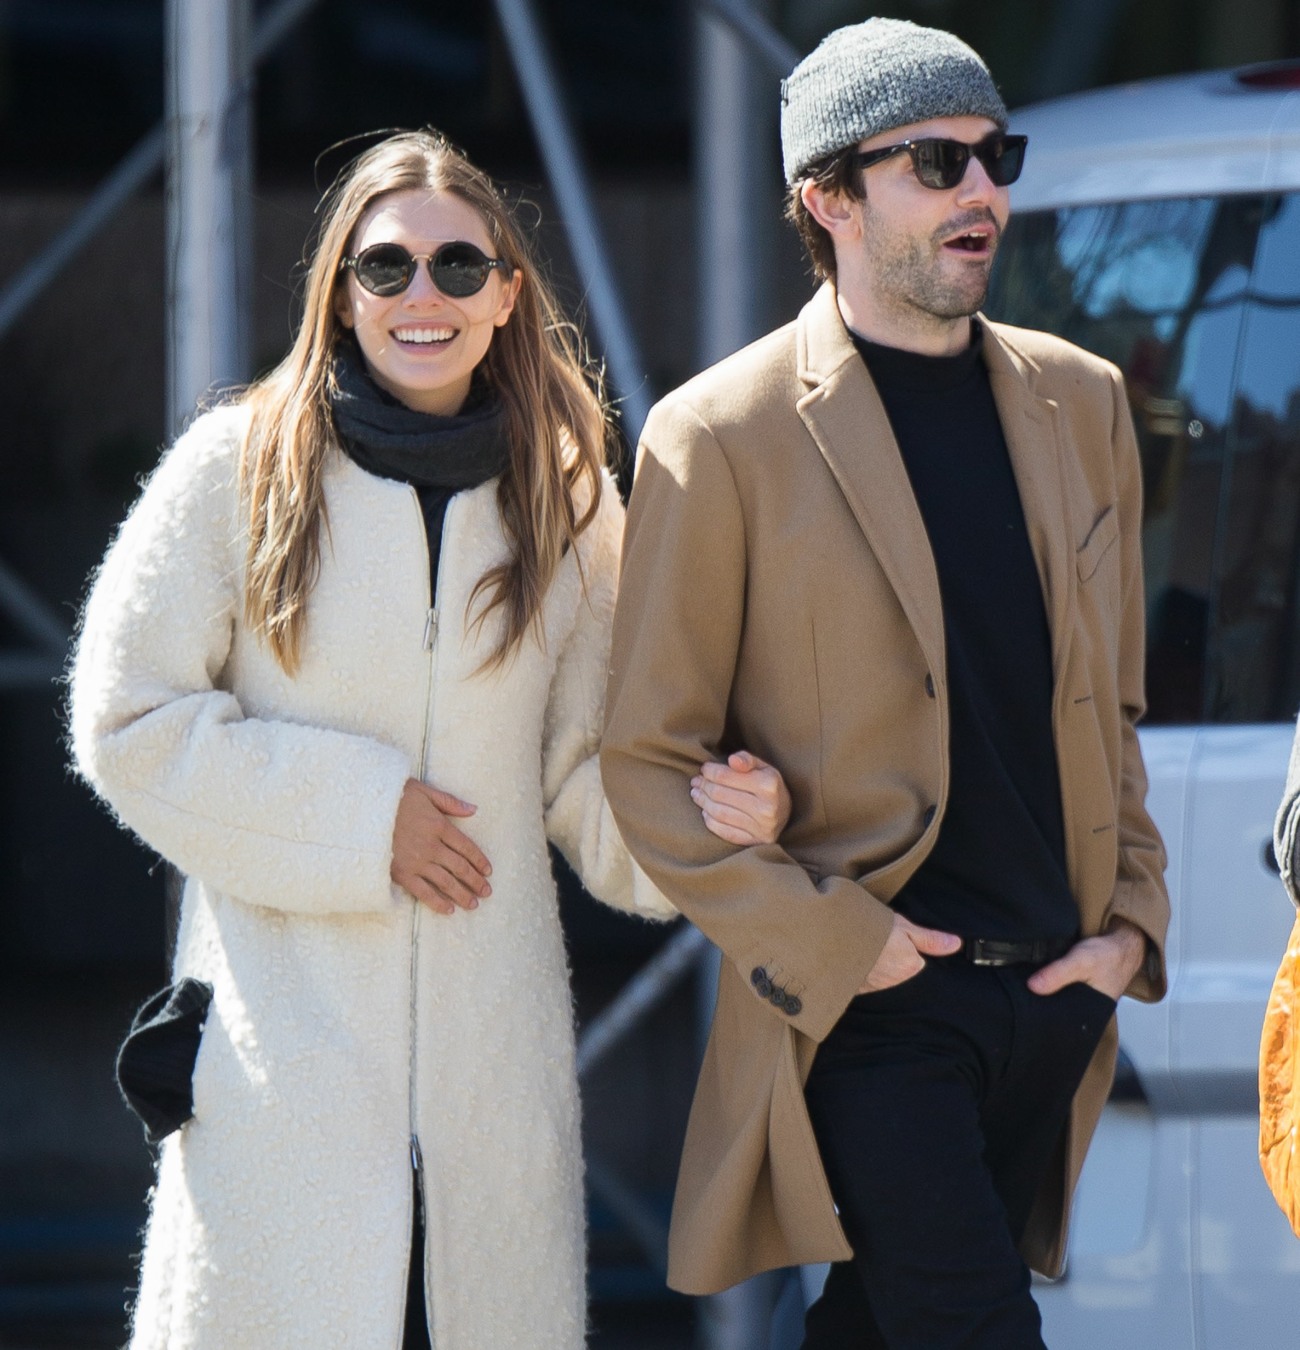 Elizabeth Olsen Out In NYC With Her Boyfriend